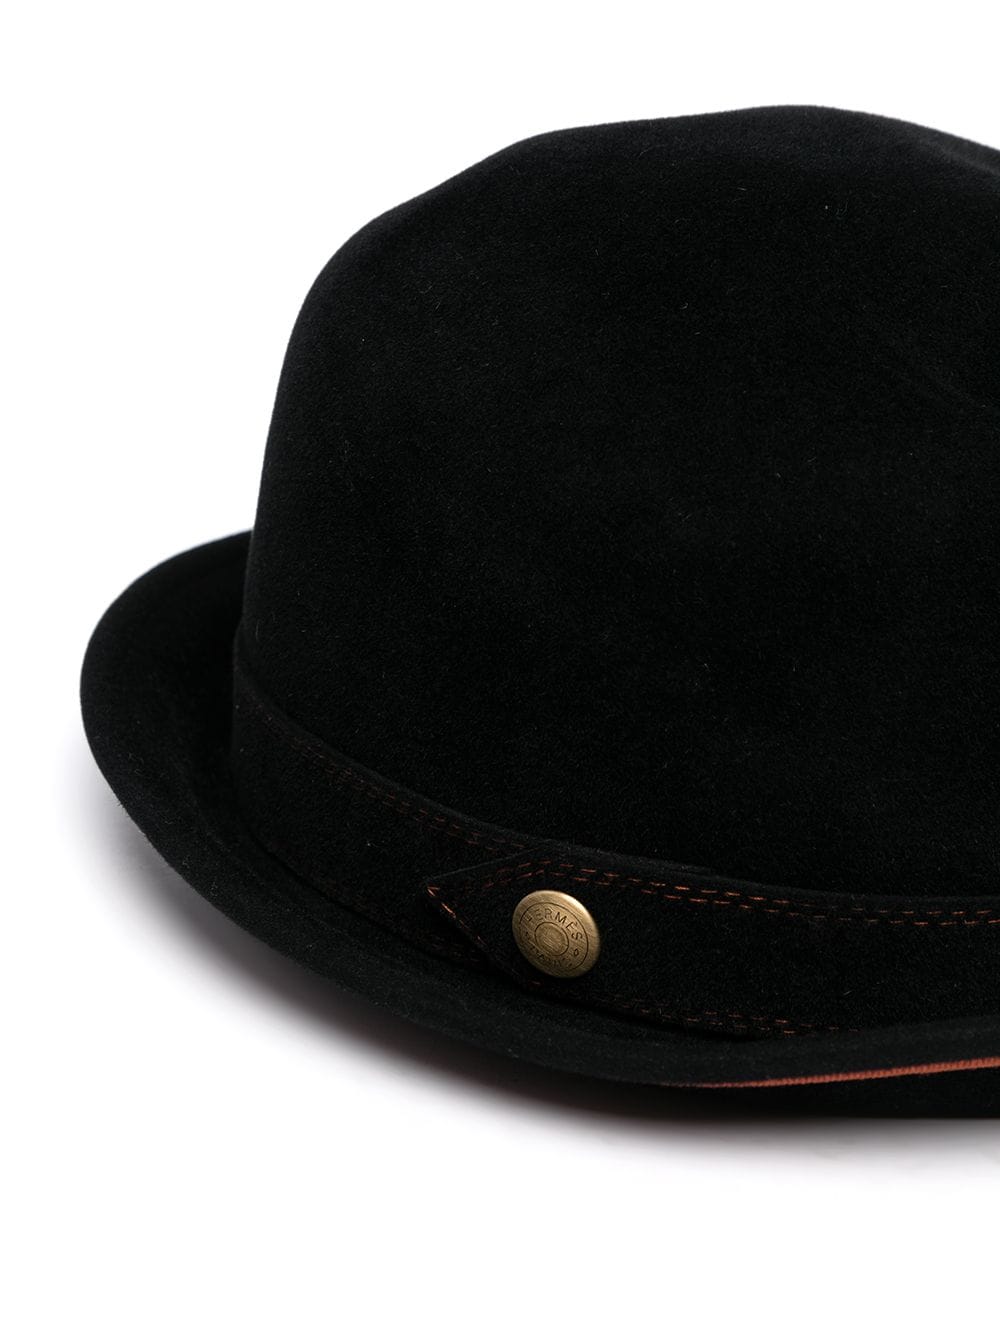 фото Hermès шляпа-федора 1990-х годов с логотипом